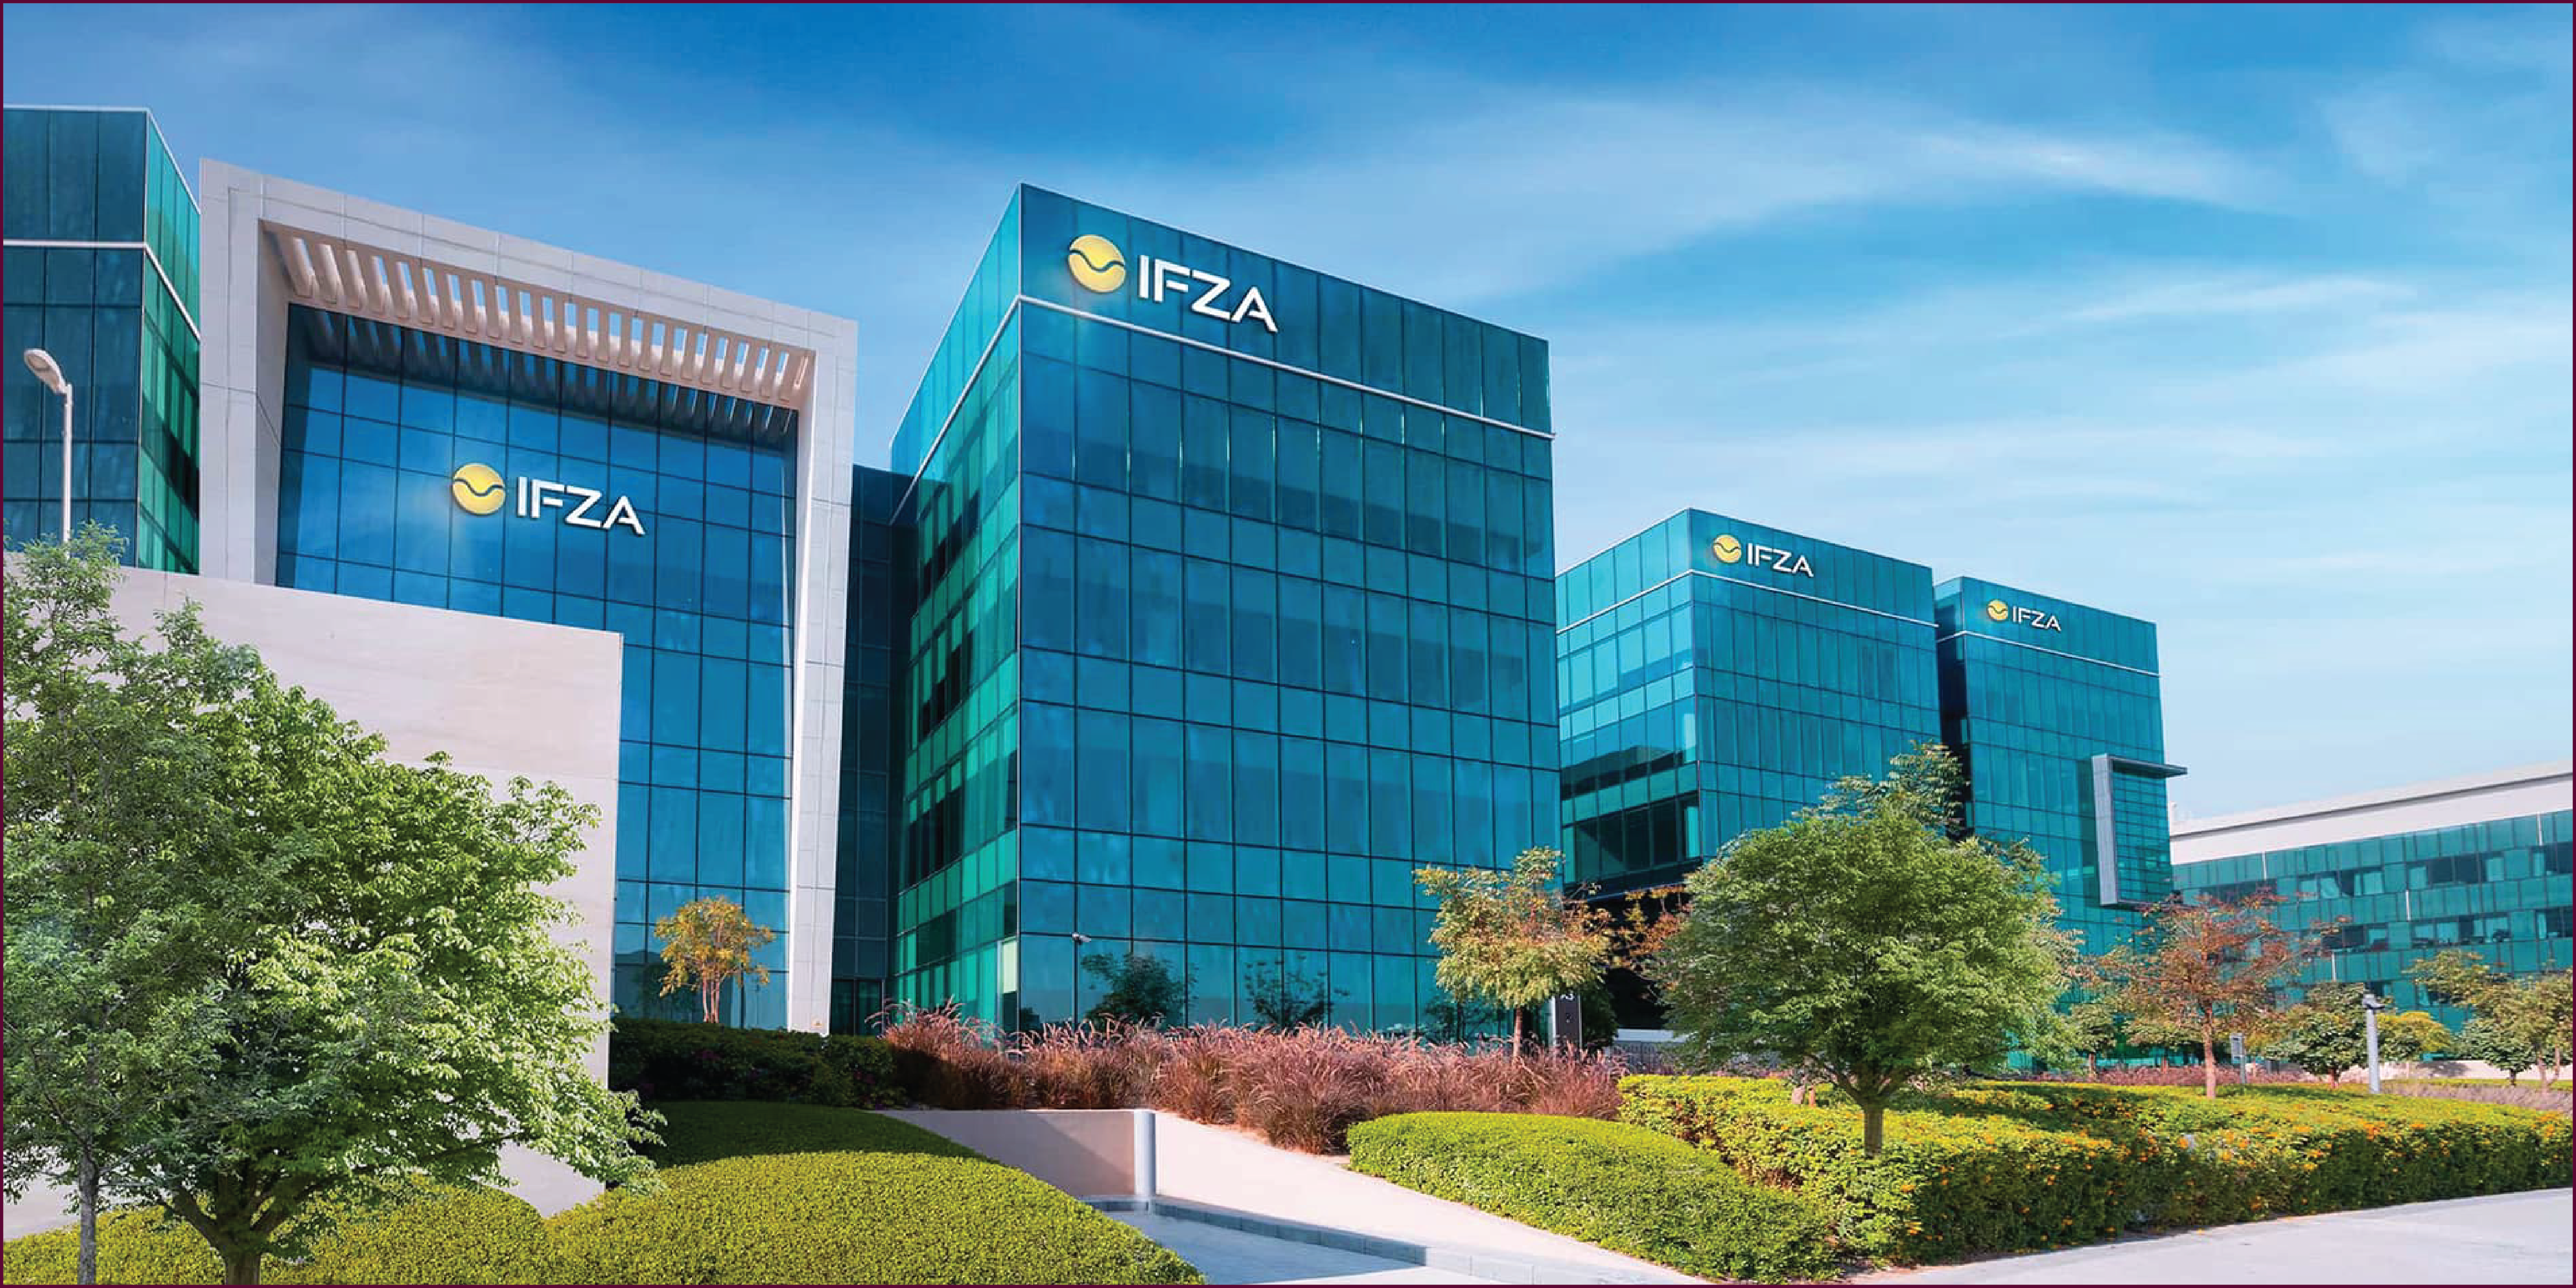 BUSINESS SETUP IN IFZA DUBAI